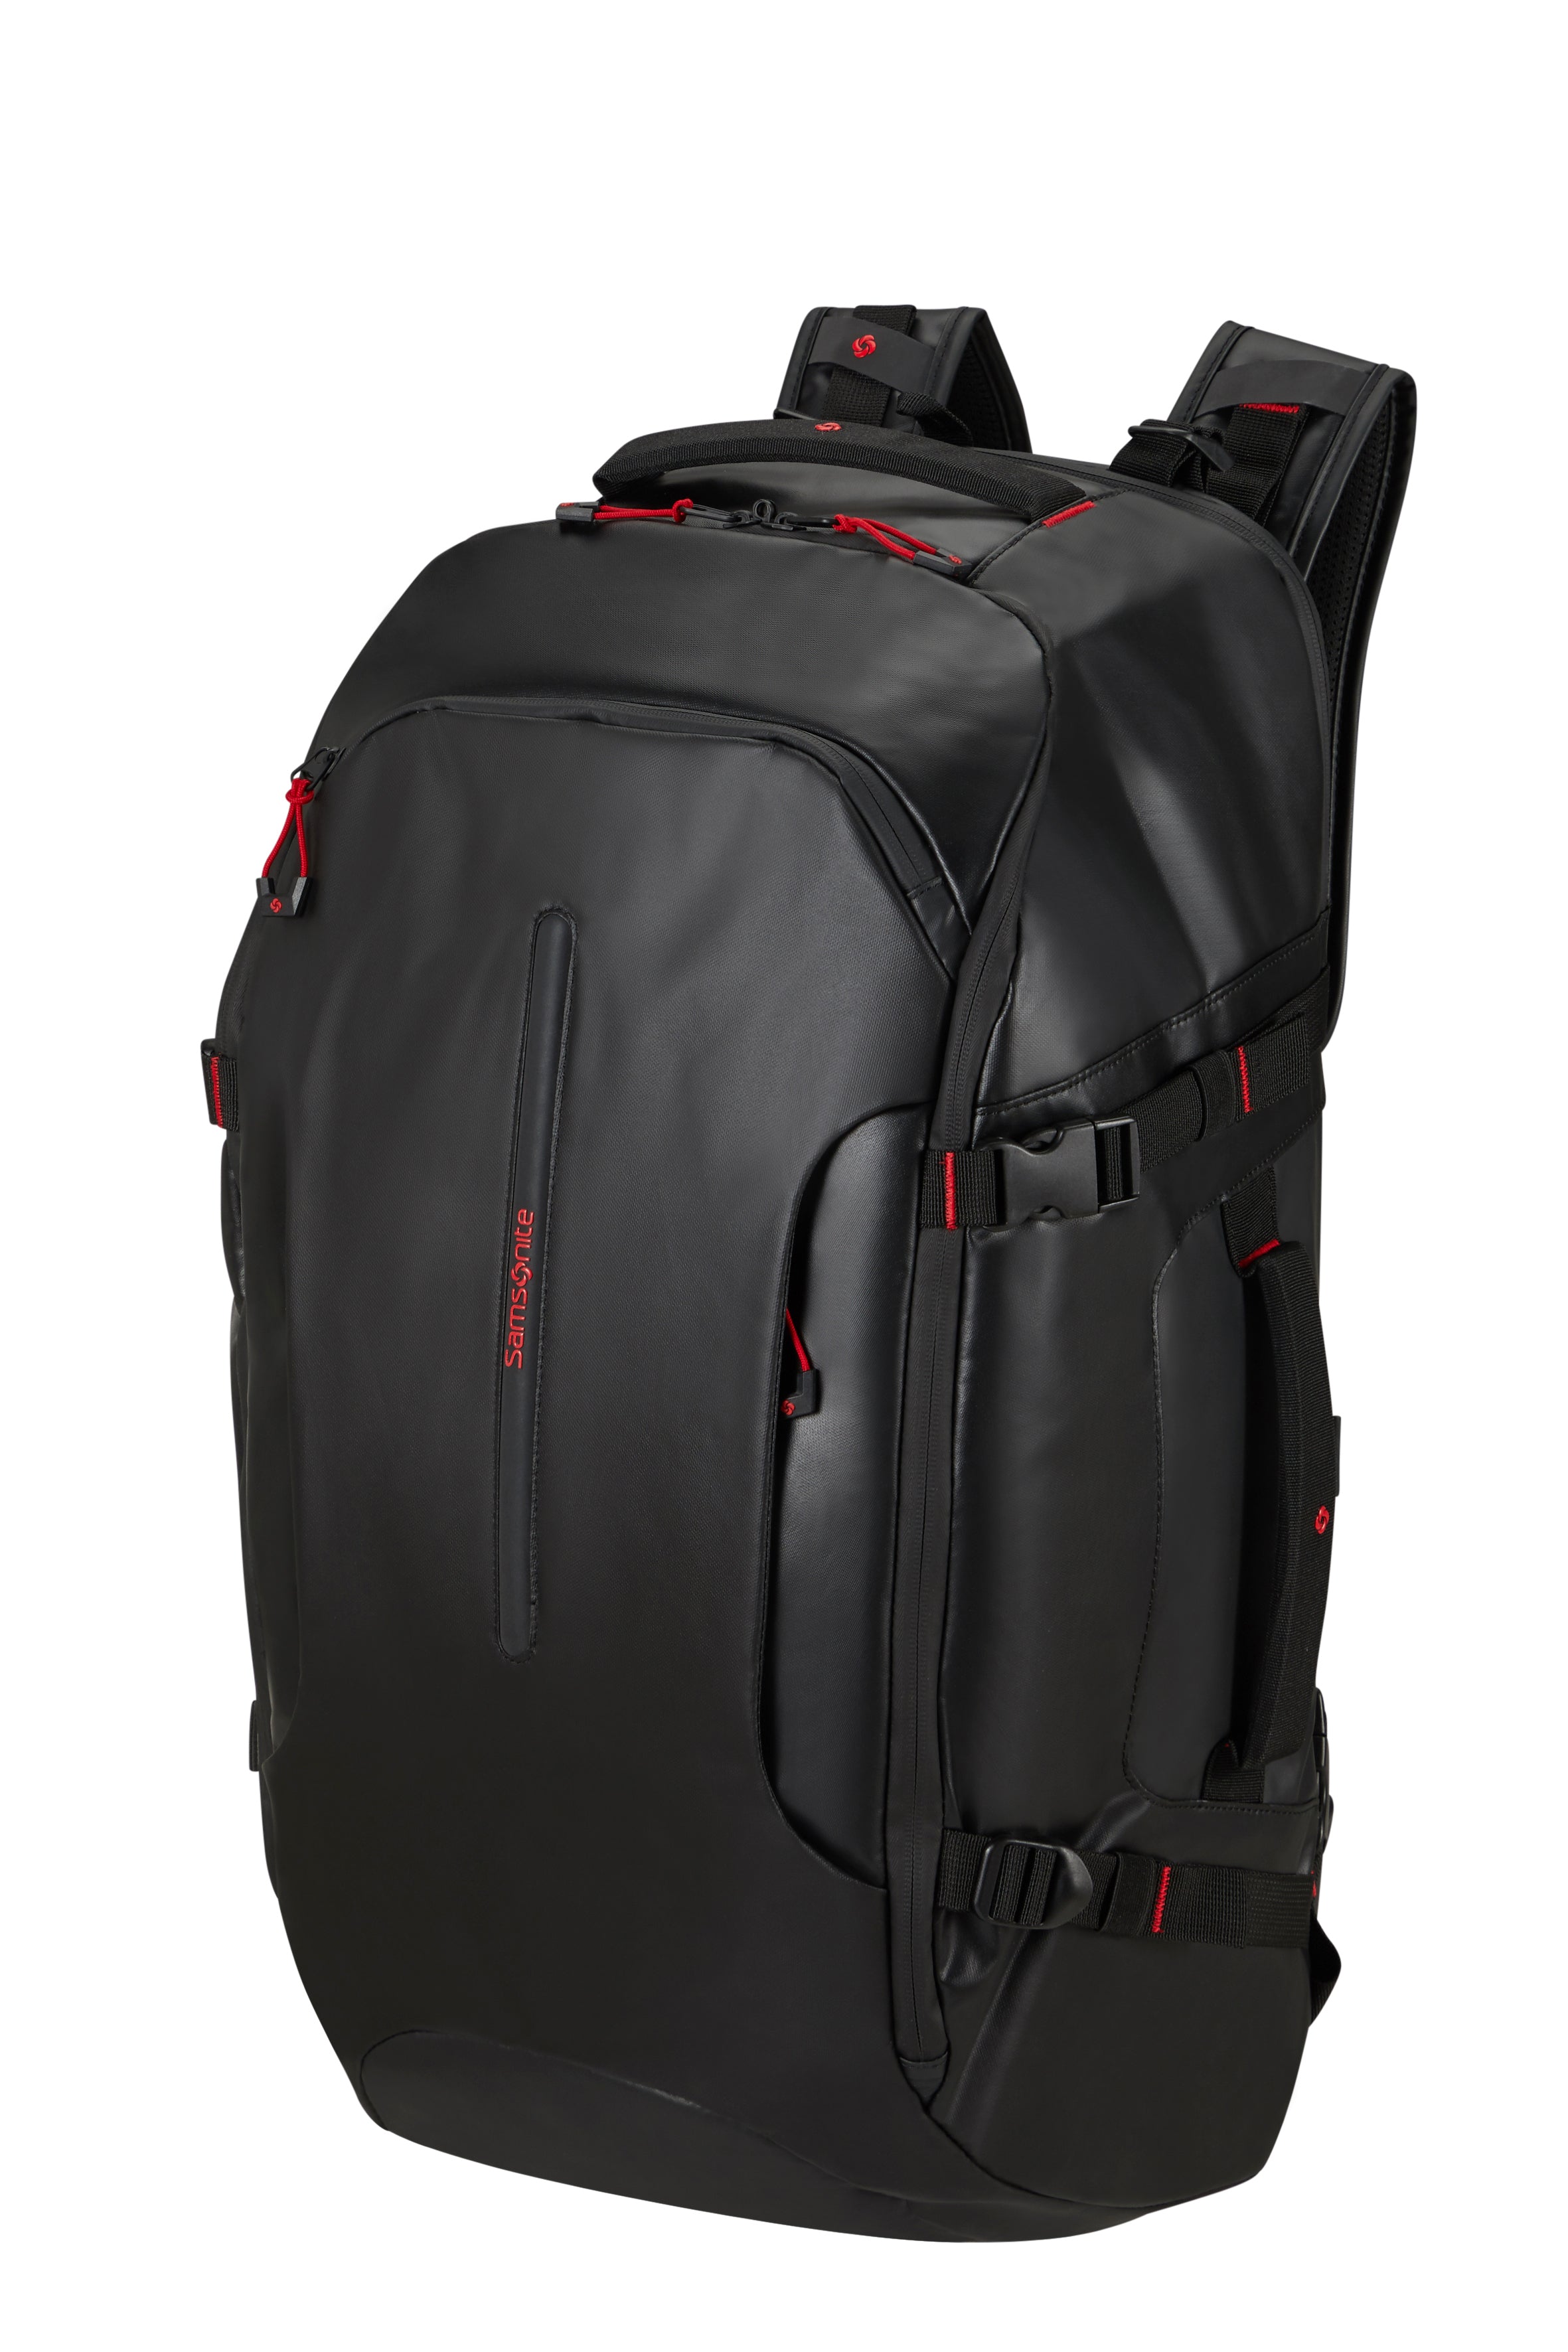 Samsonite Ecodiver Medium Travel Backpack